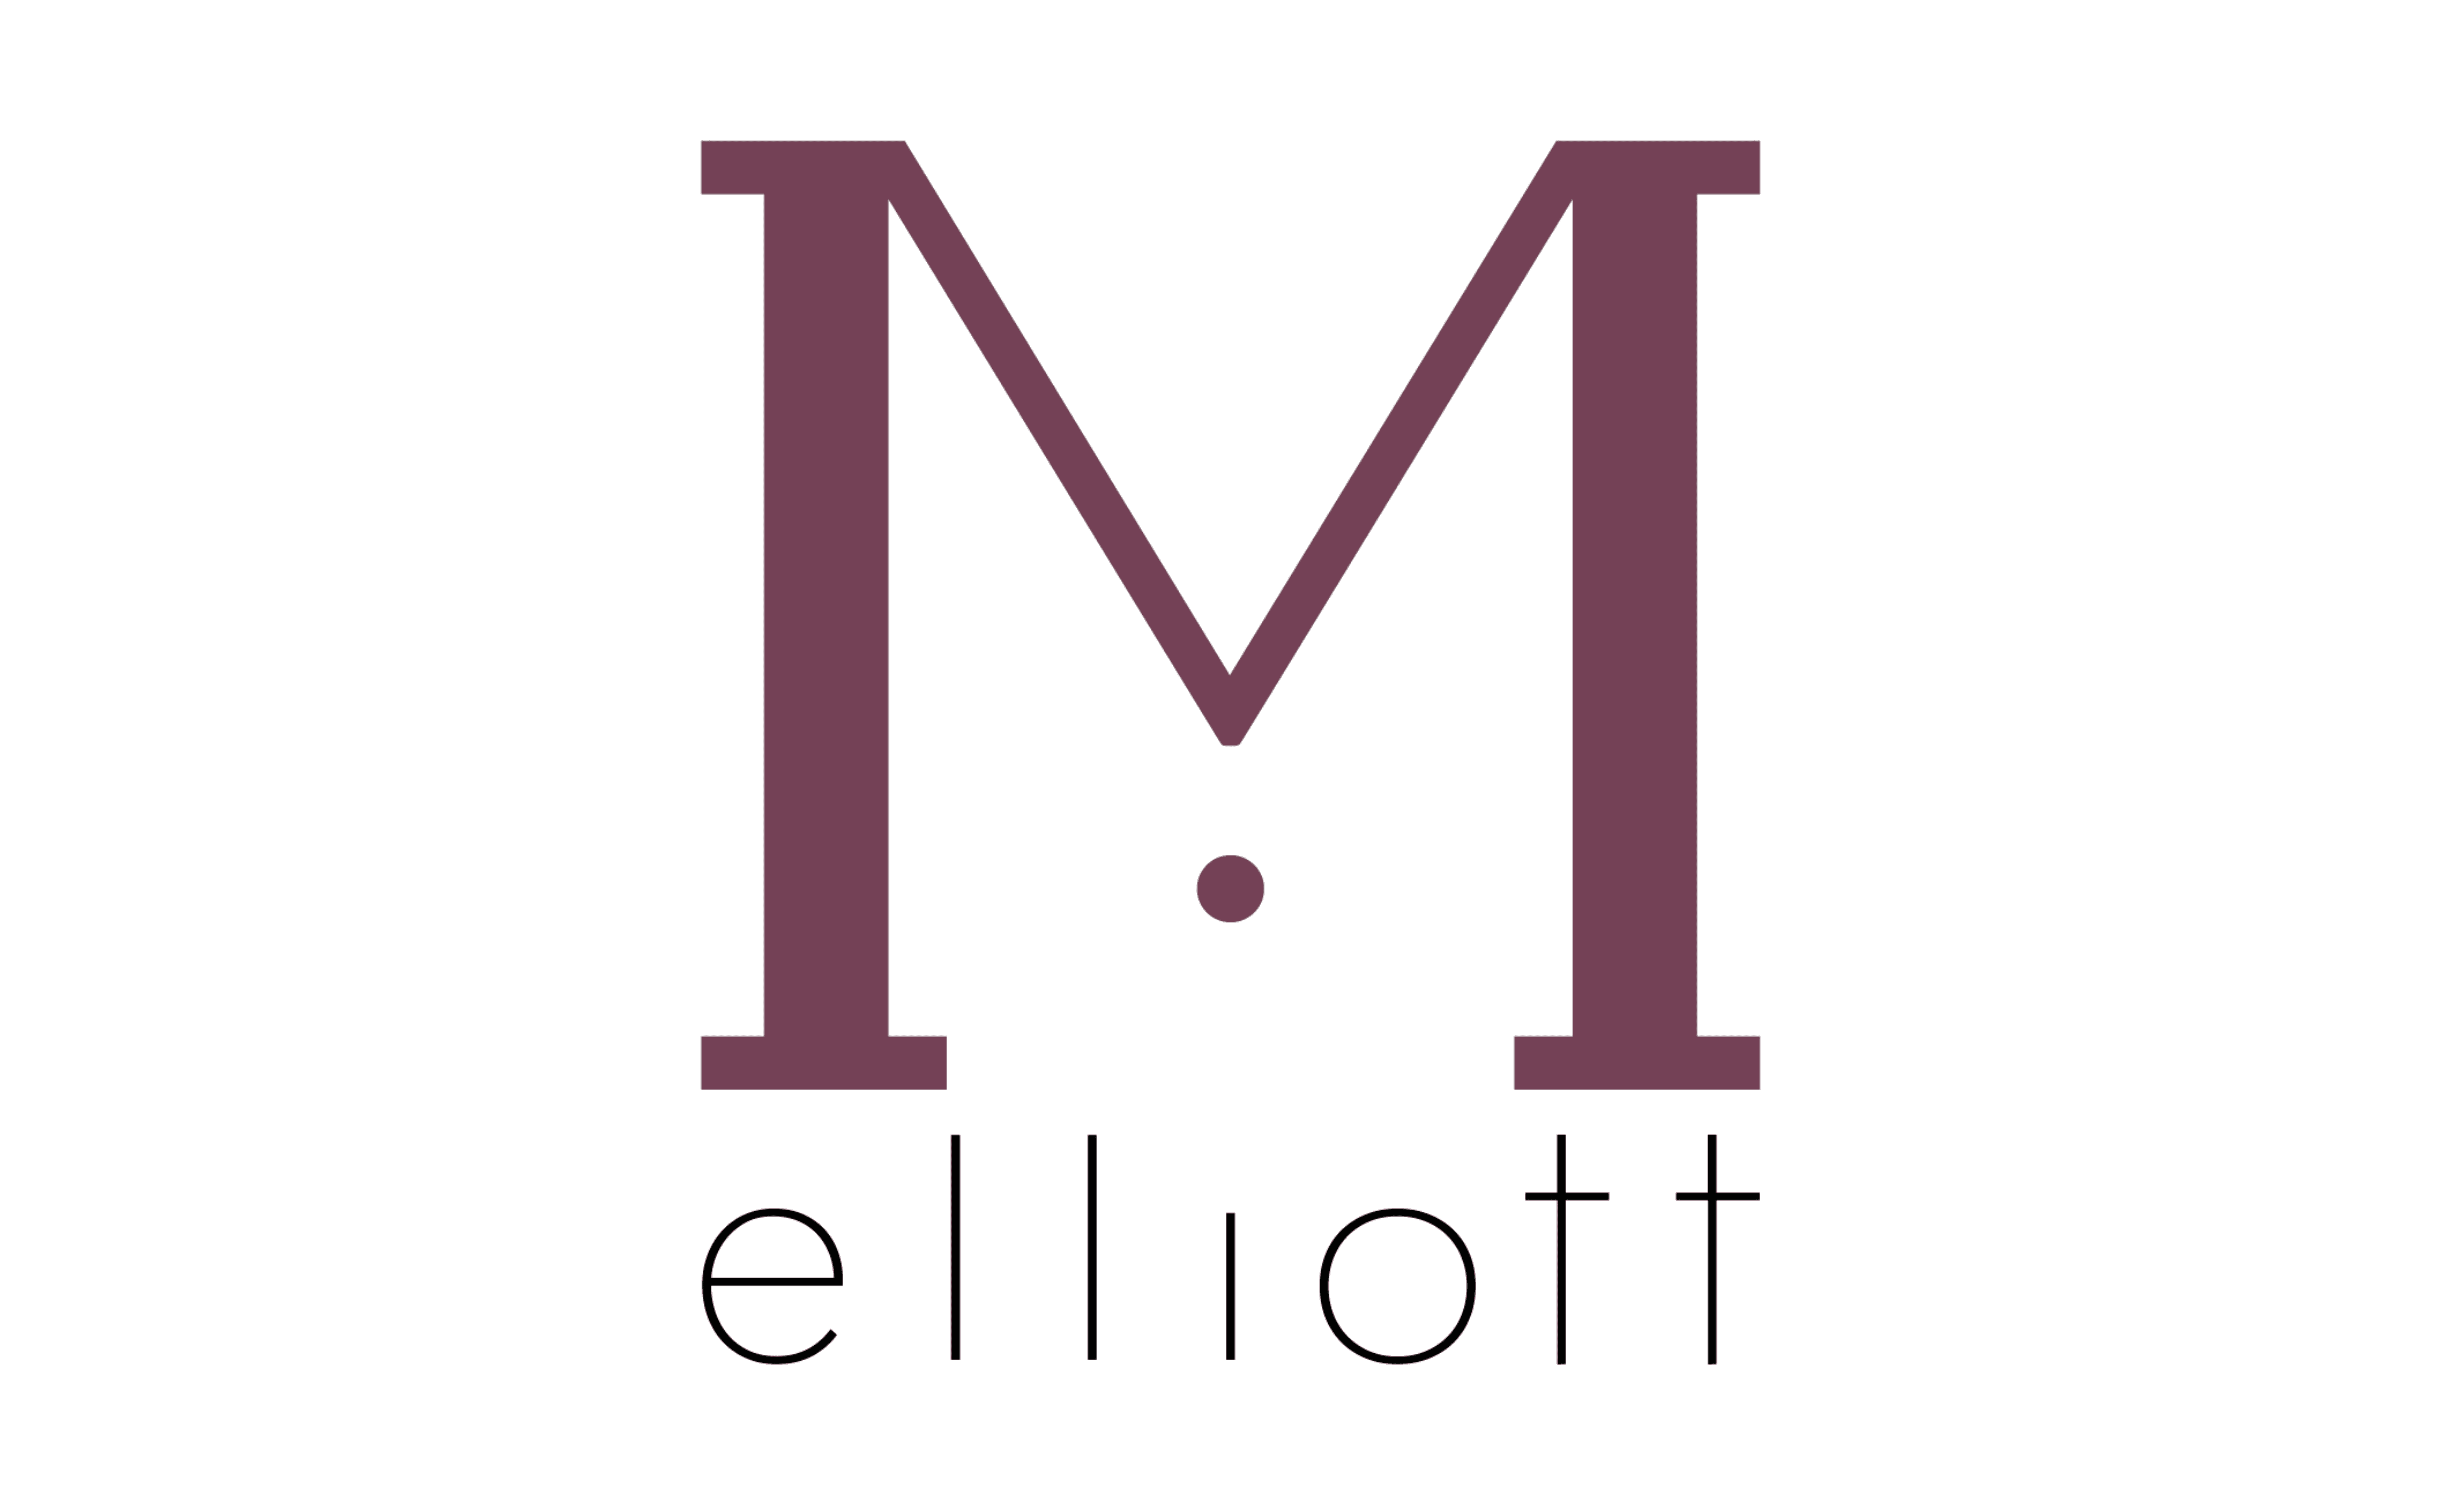 Montana Elliott